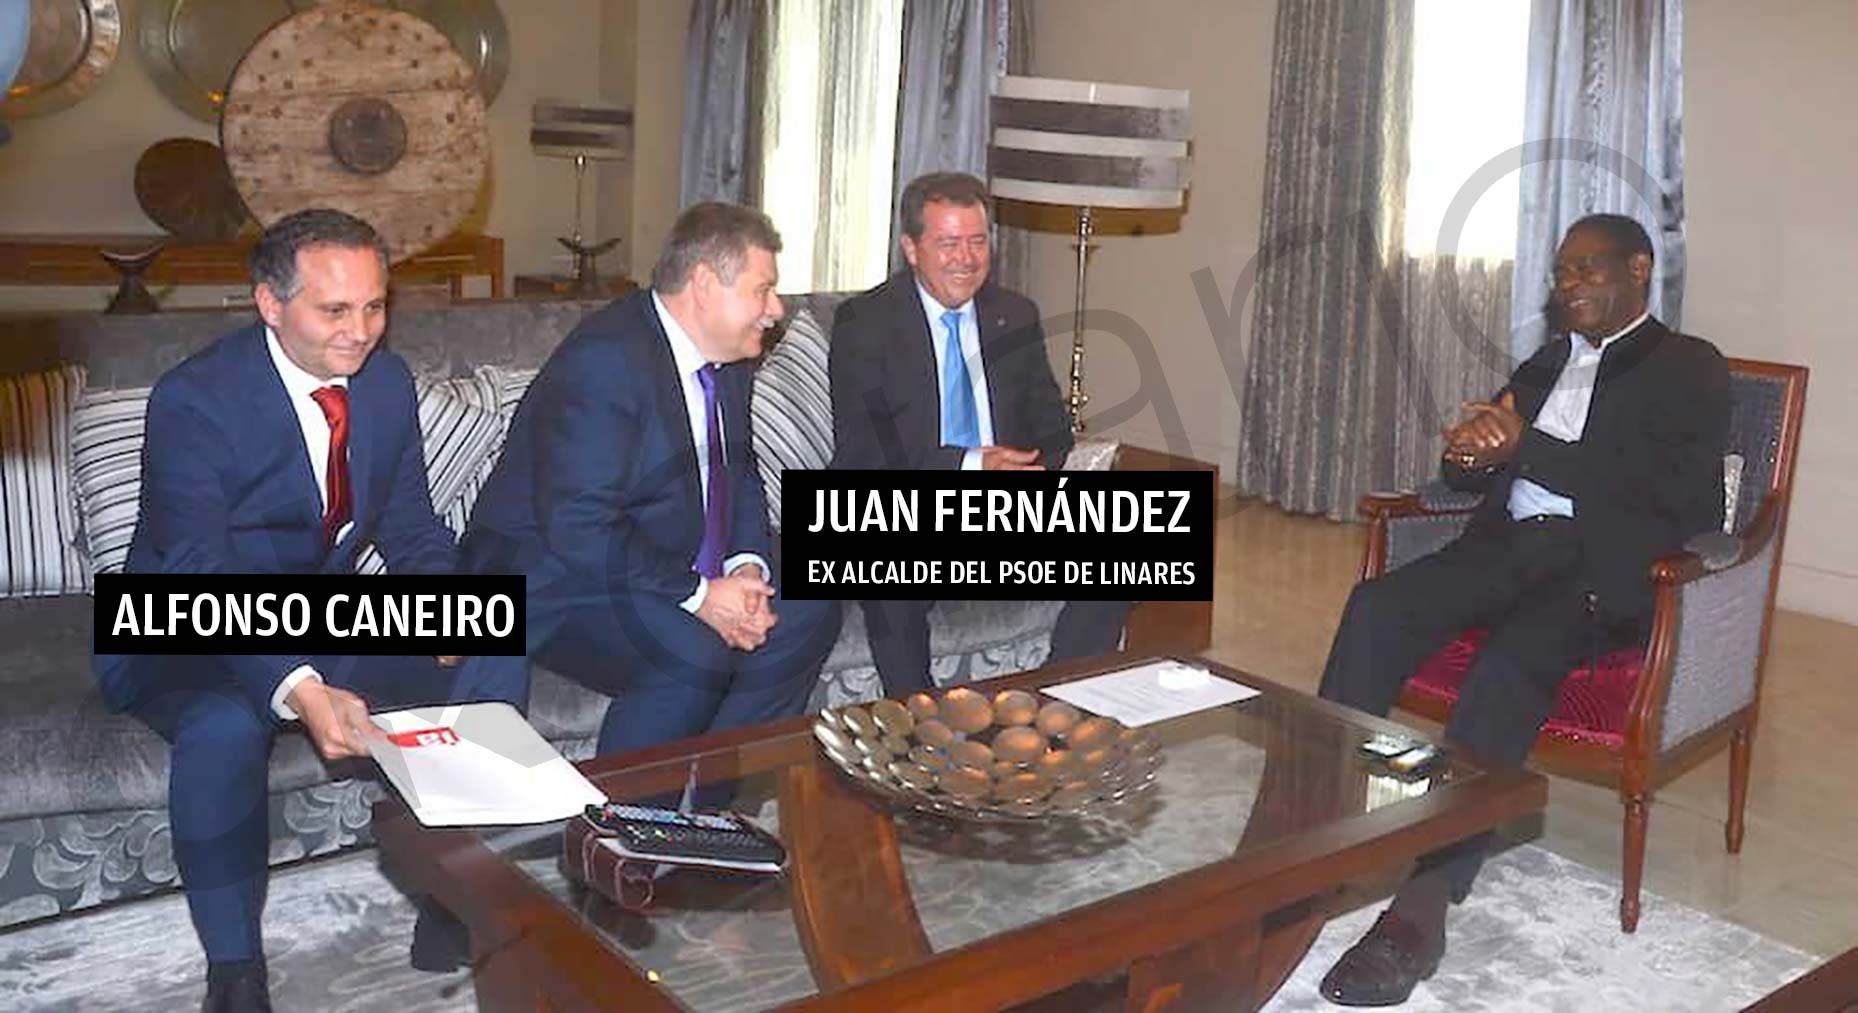 El empresario Alfonso Caneiro y Juan Fernández junto a Teodoro Obiang, presidente de Guinea Ecuatorial.